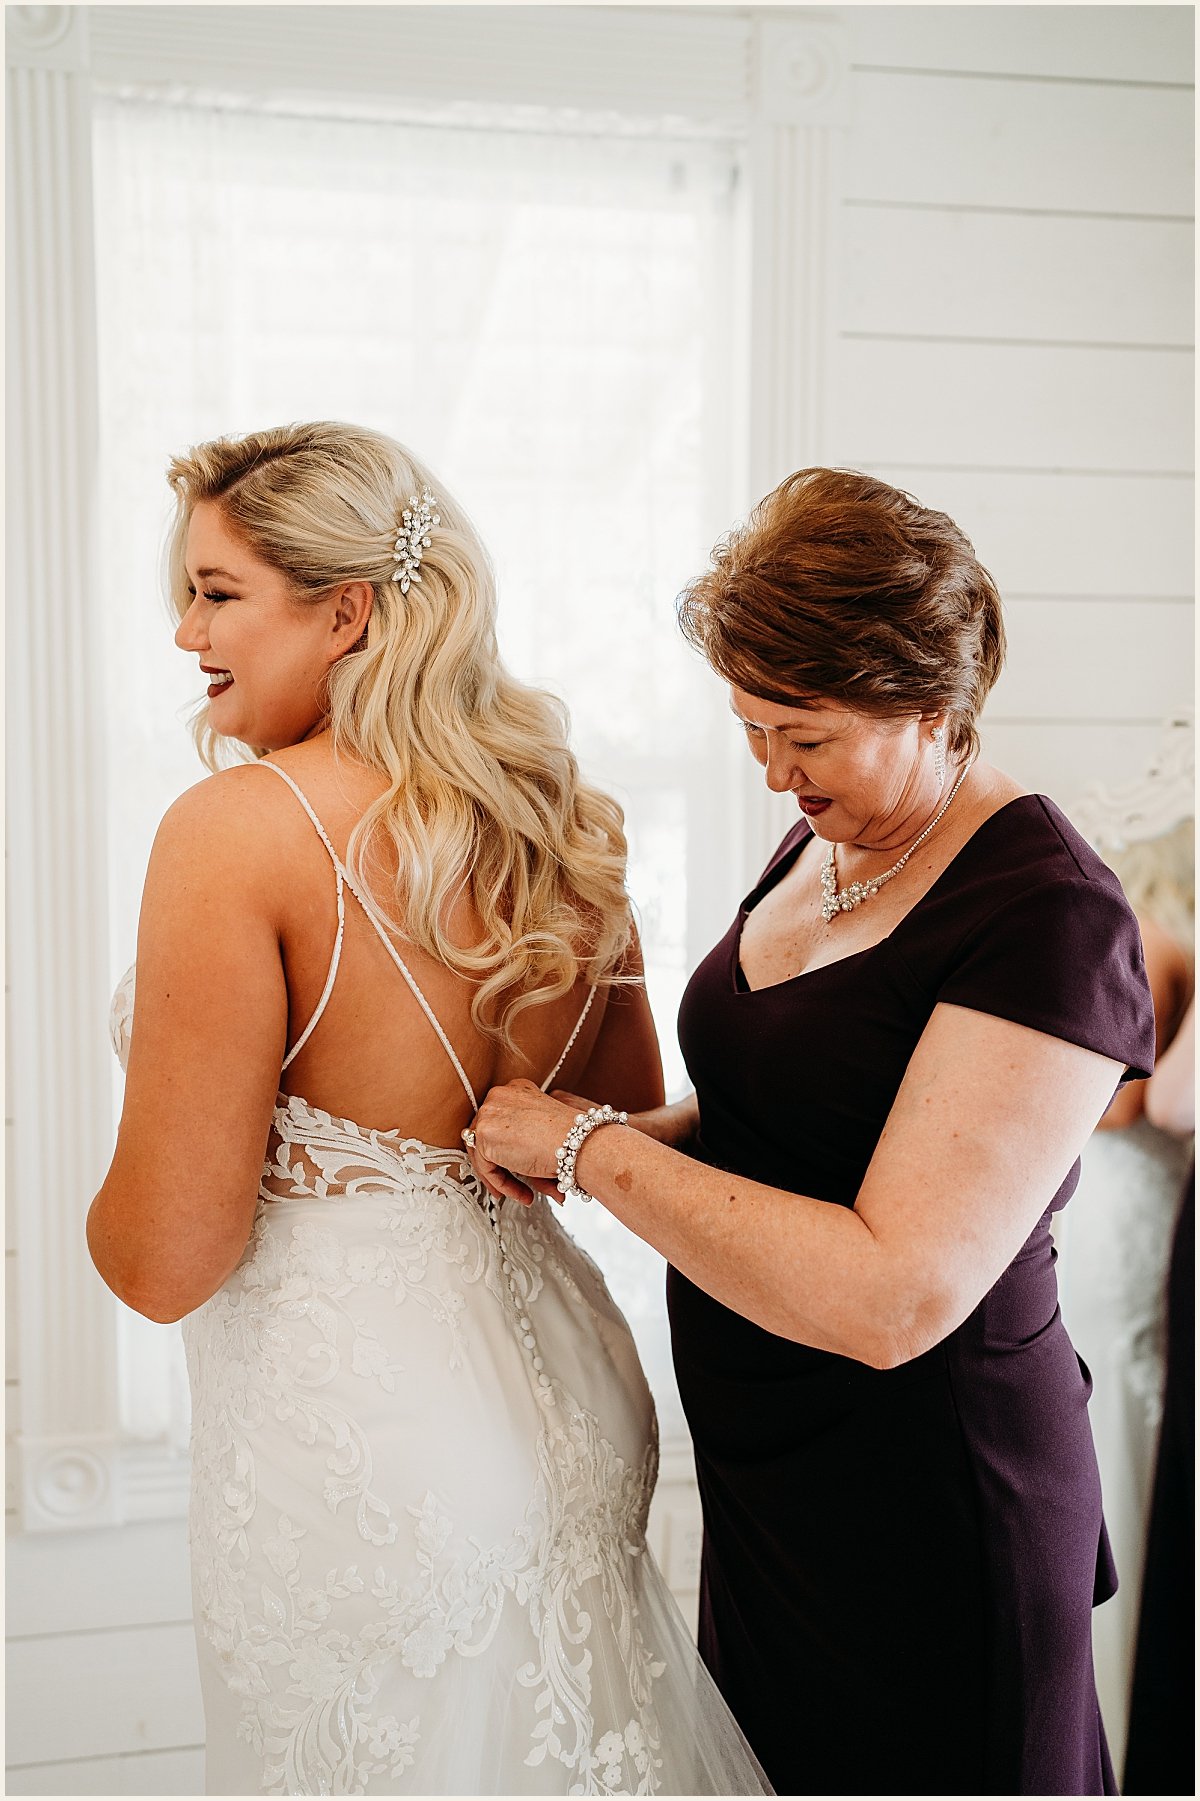 Bride and mom getting ready photos | Lauren Crumpler Photography | Texas Wedding Photographer